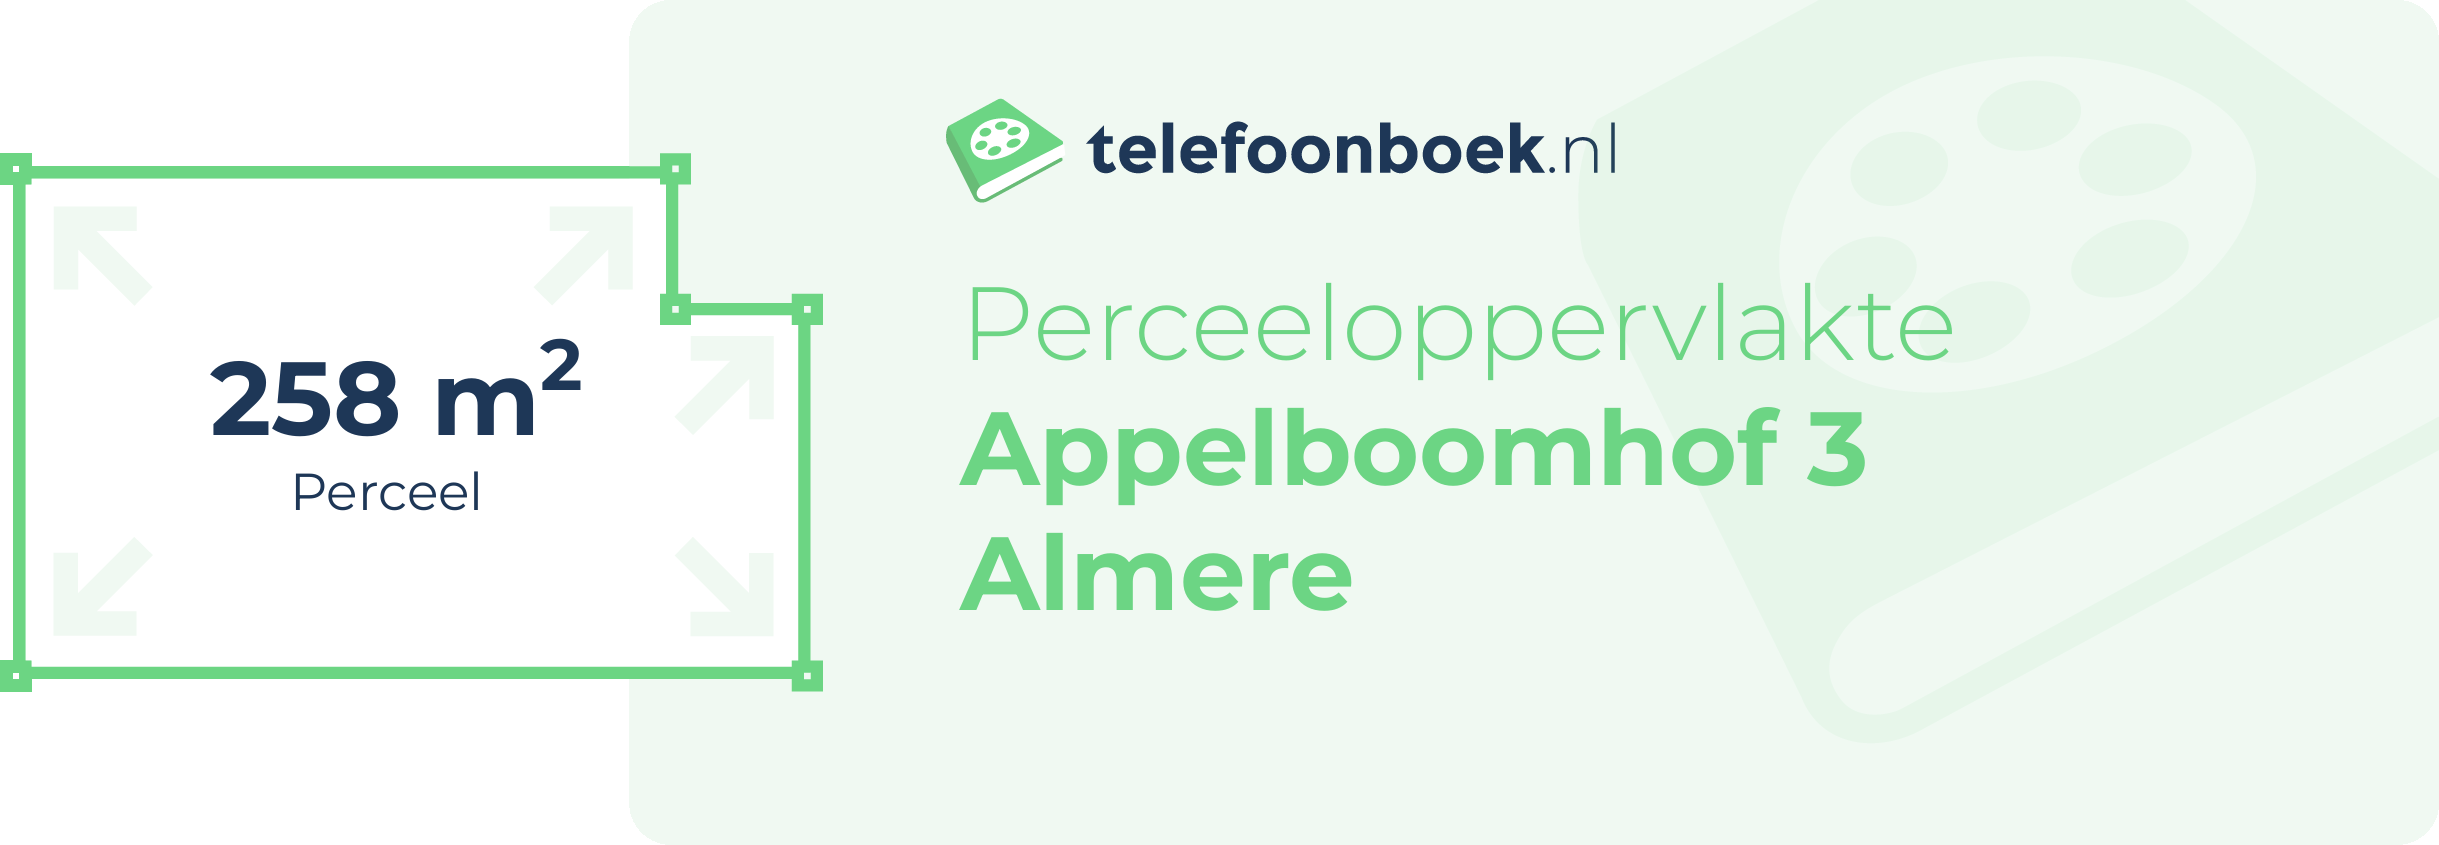 Perceeloppervlakte Appelboomhof 3 Almere